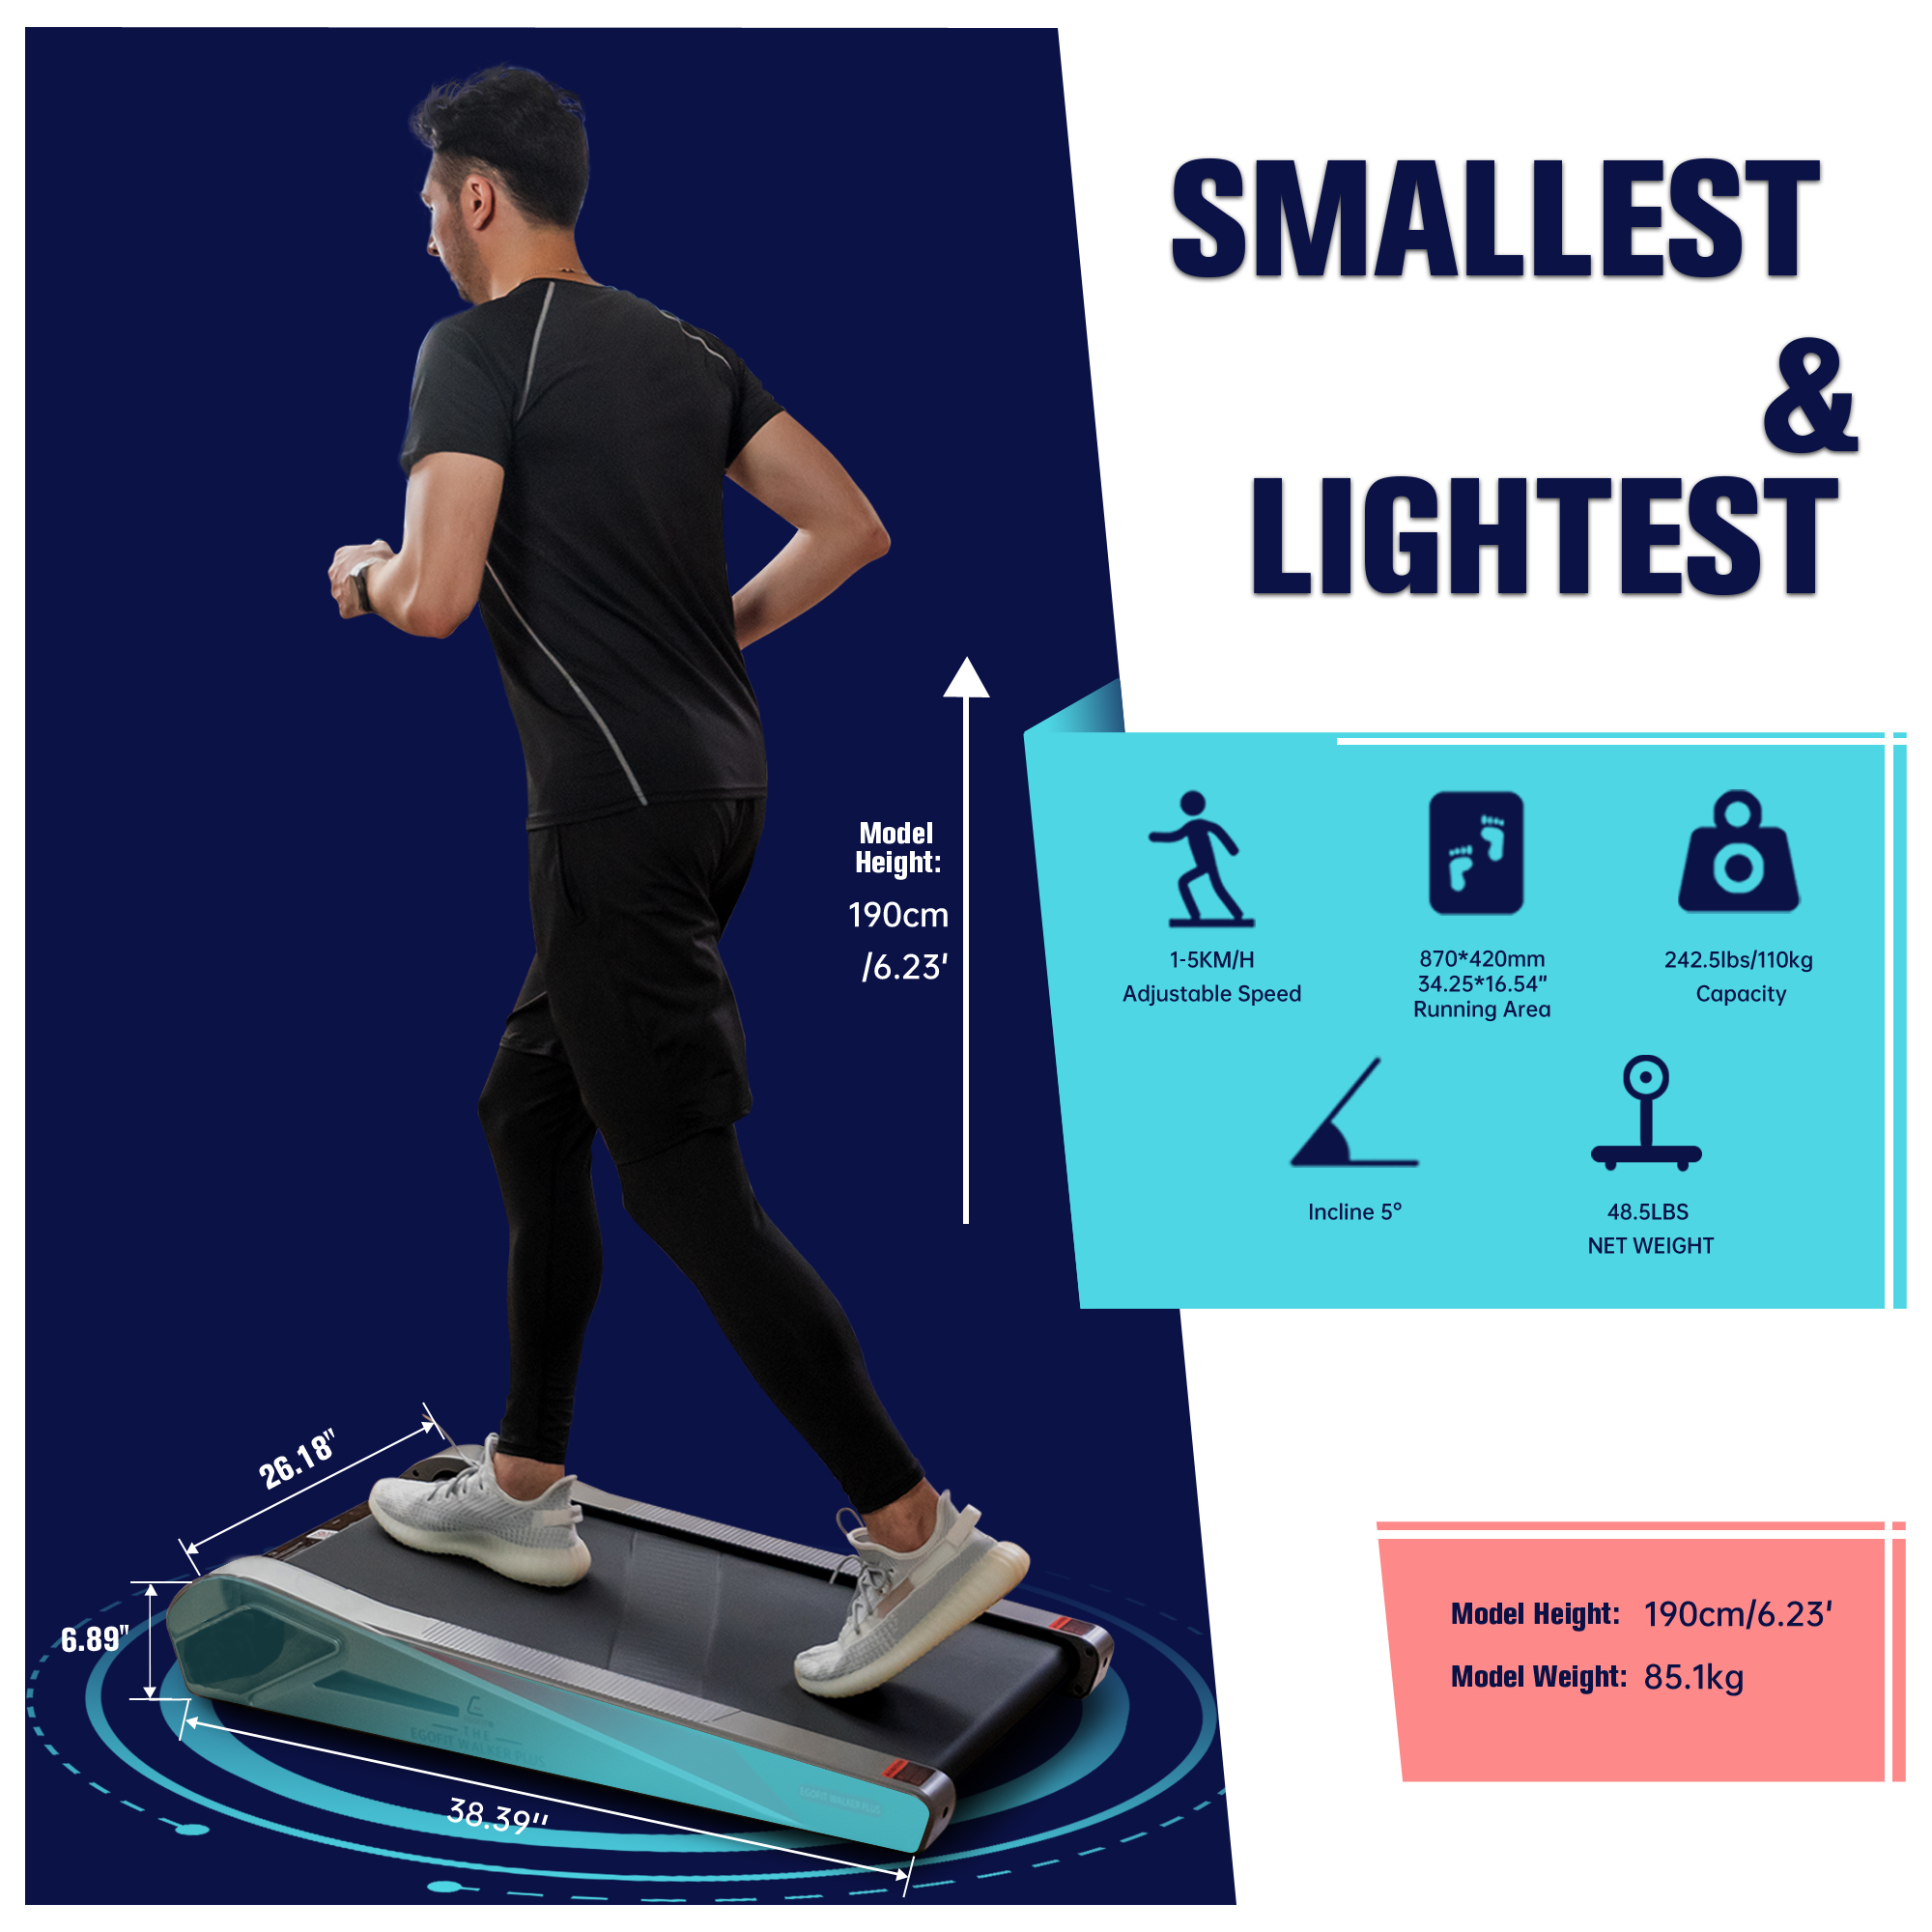 Egofit Walker Pro Smallest Under Desk Electric Walking Treadmill for Home 2.0HP 5 Incline - image 2 of 10